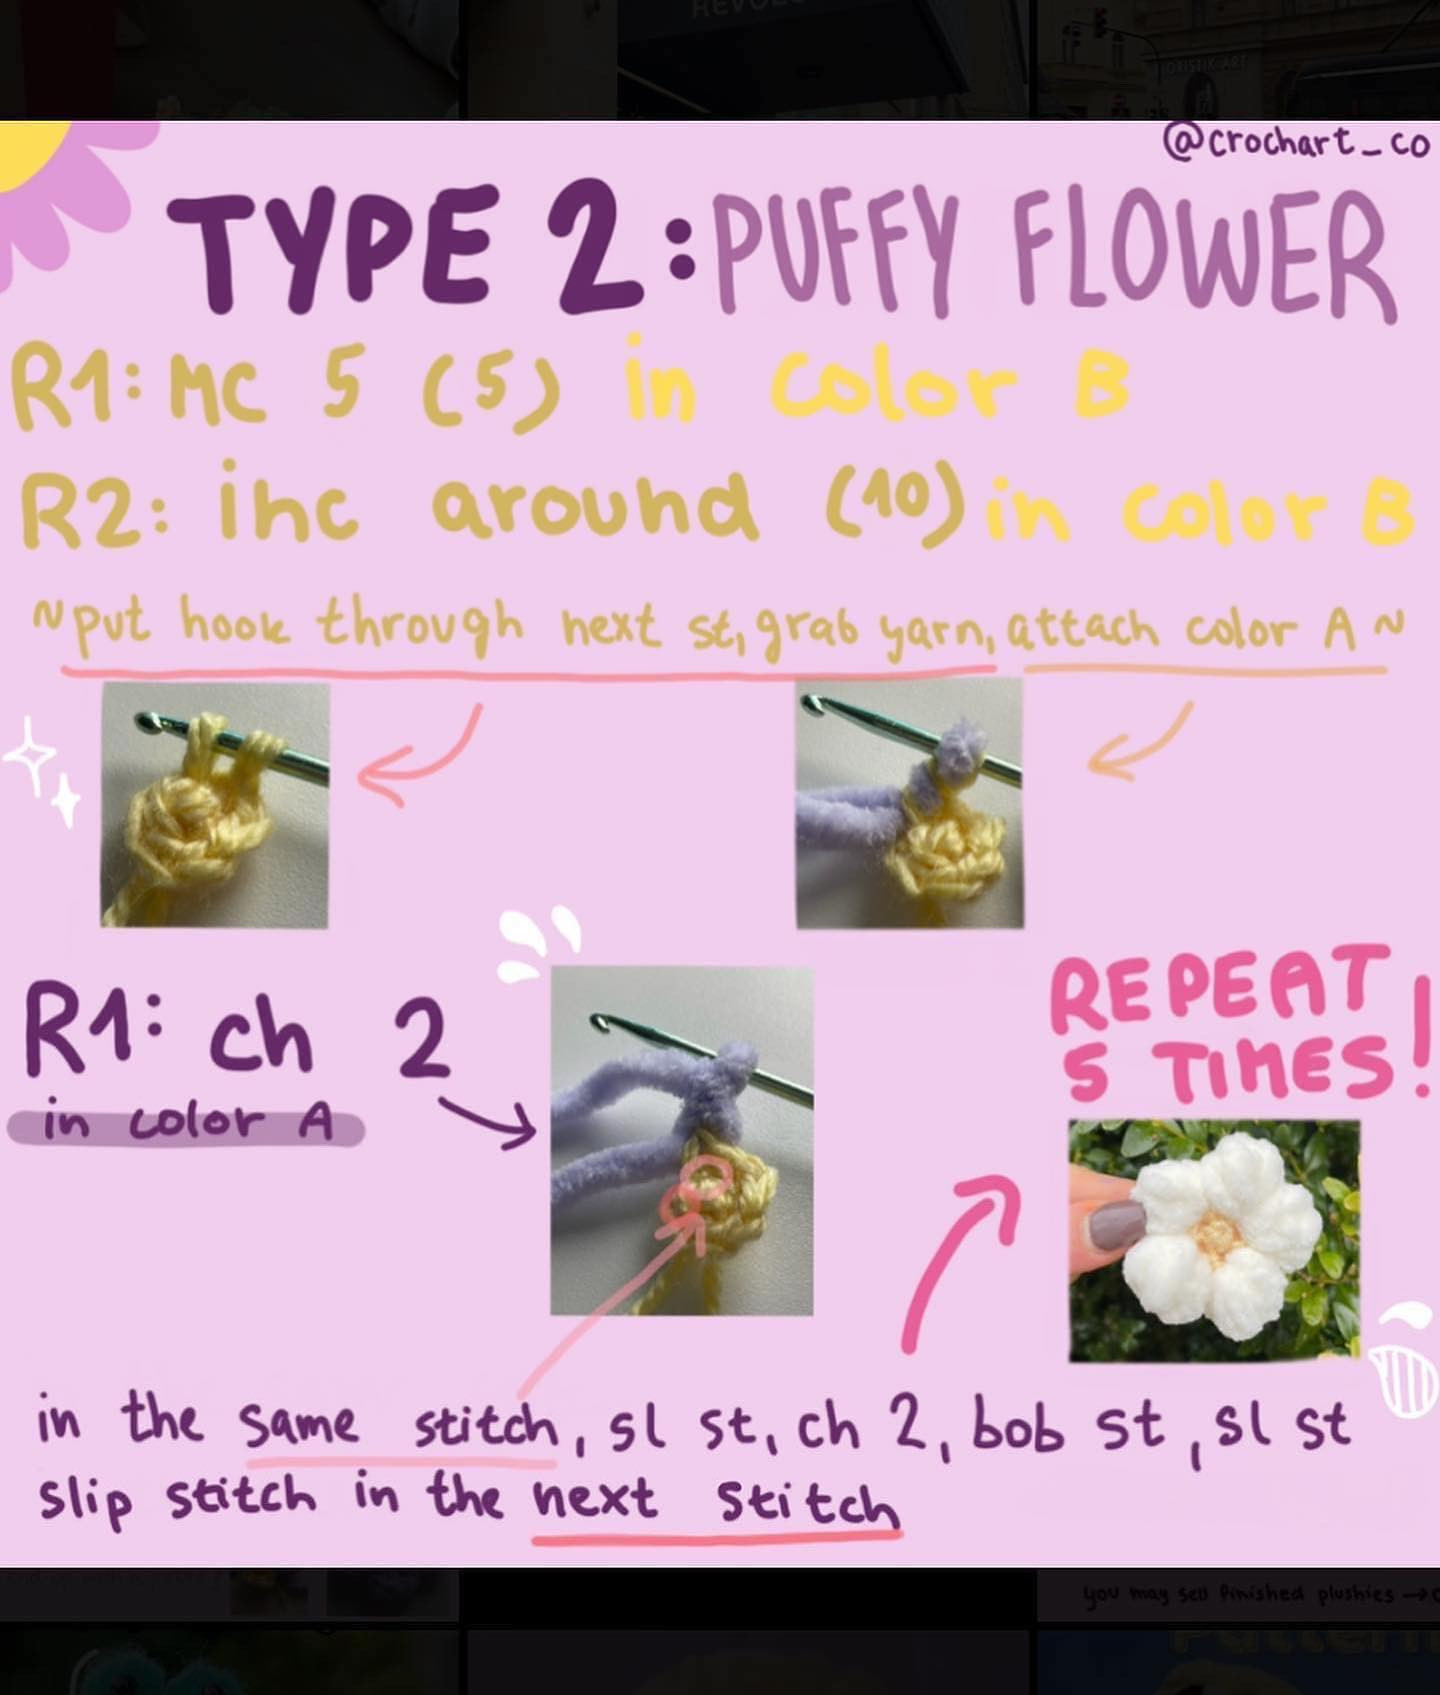 free pattern 2 types flat flower puffy flower